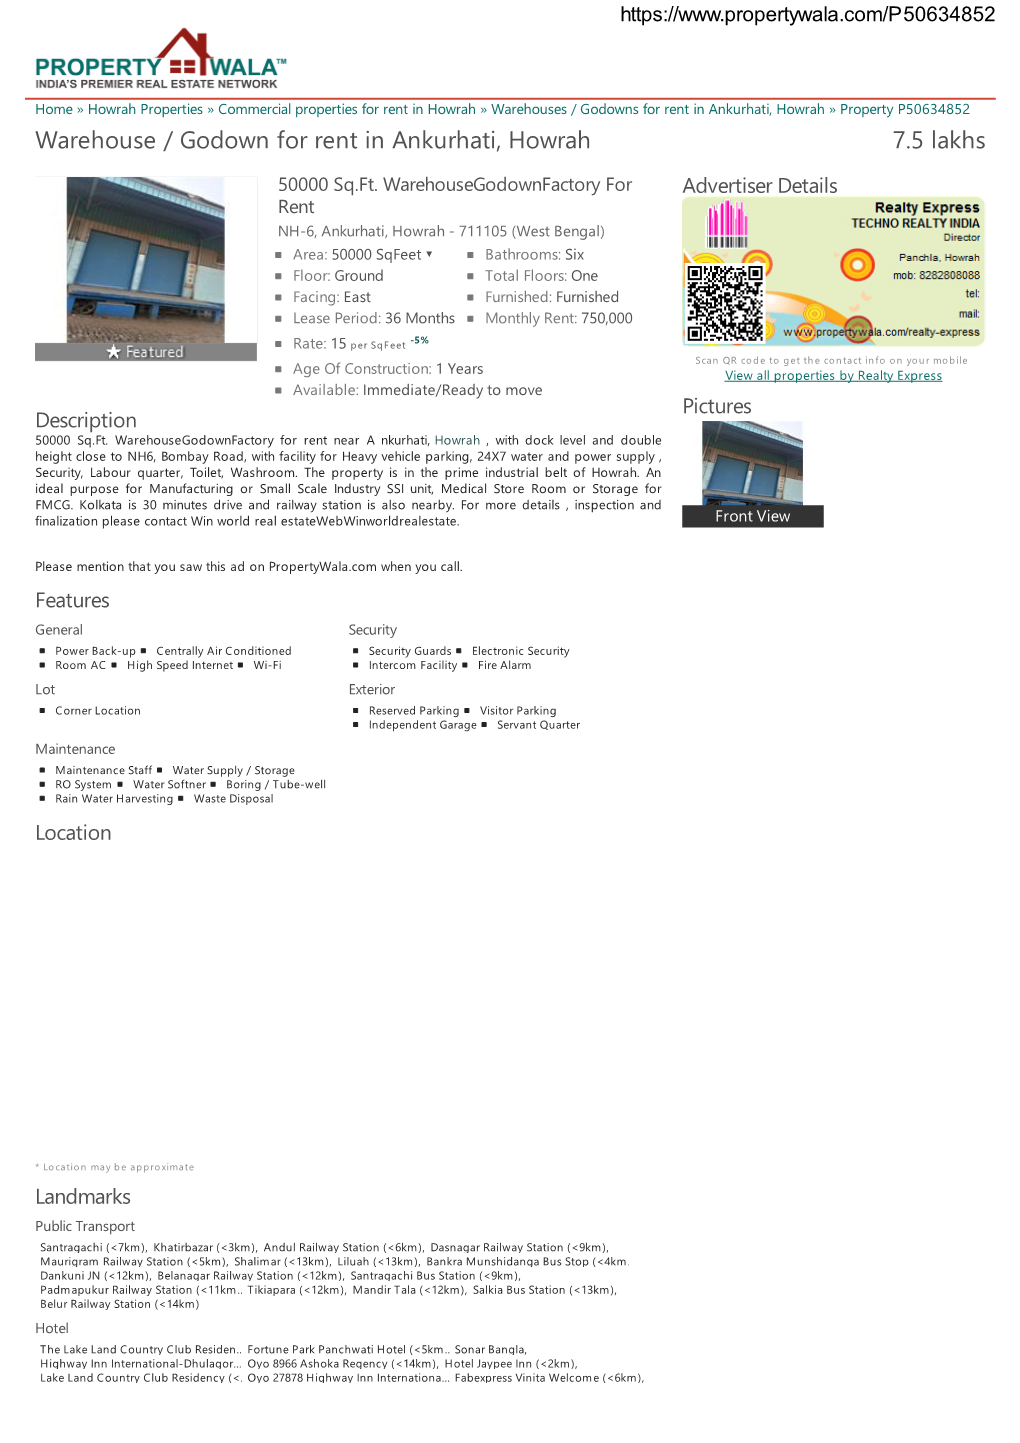 Warehouse / Godown for Rent in Ankurhati, Howrah (P50634852